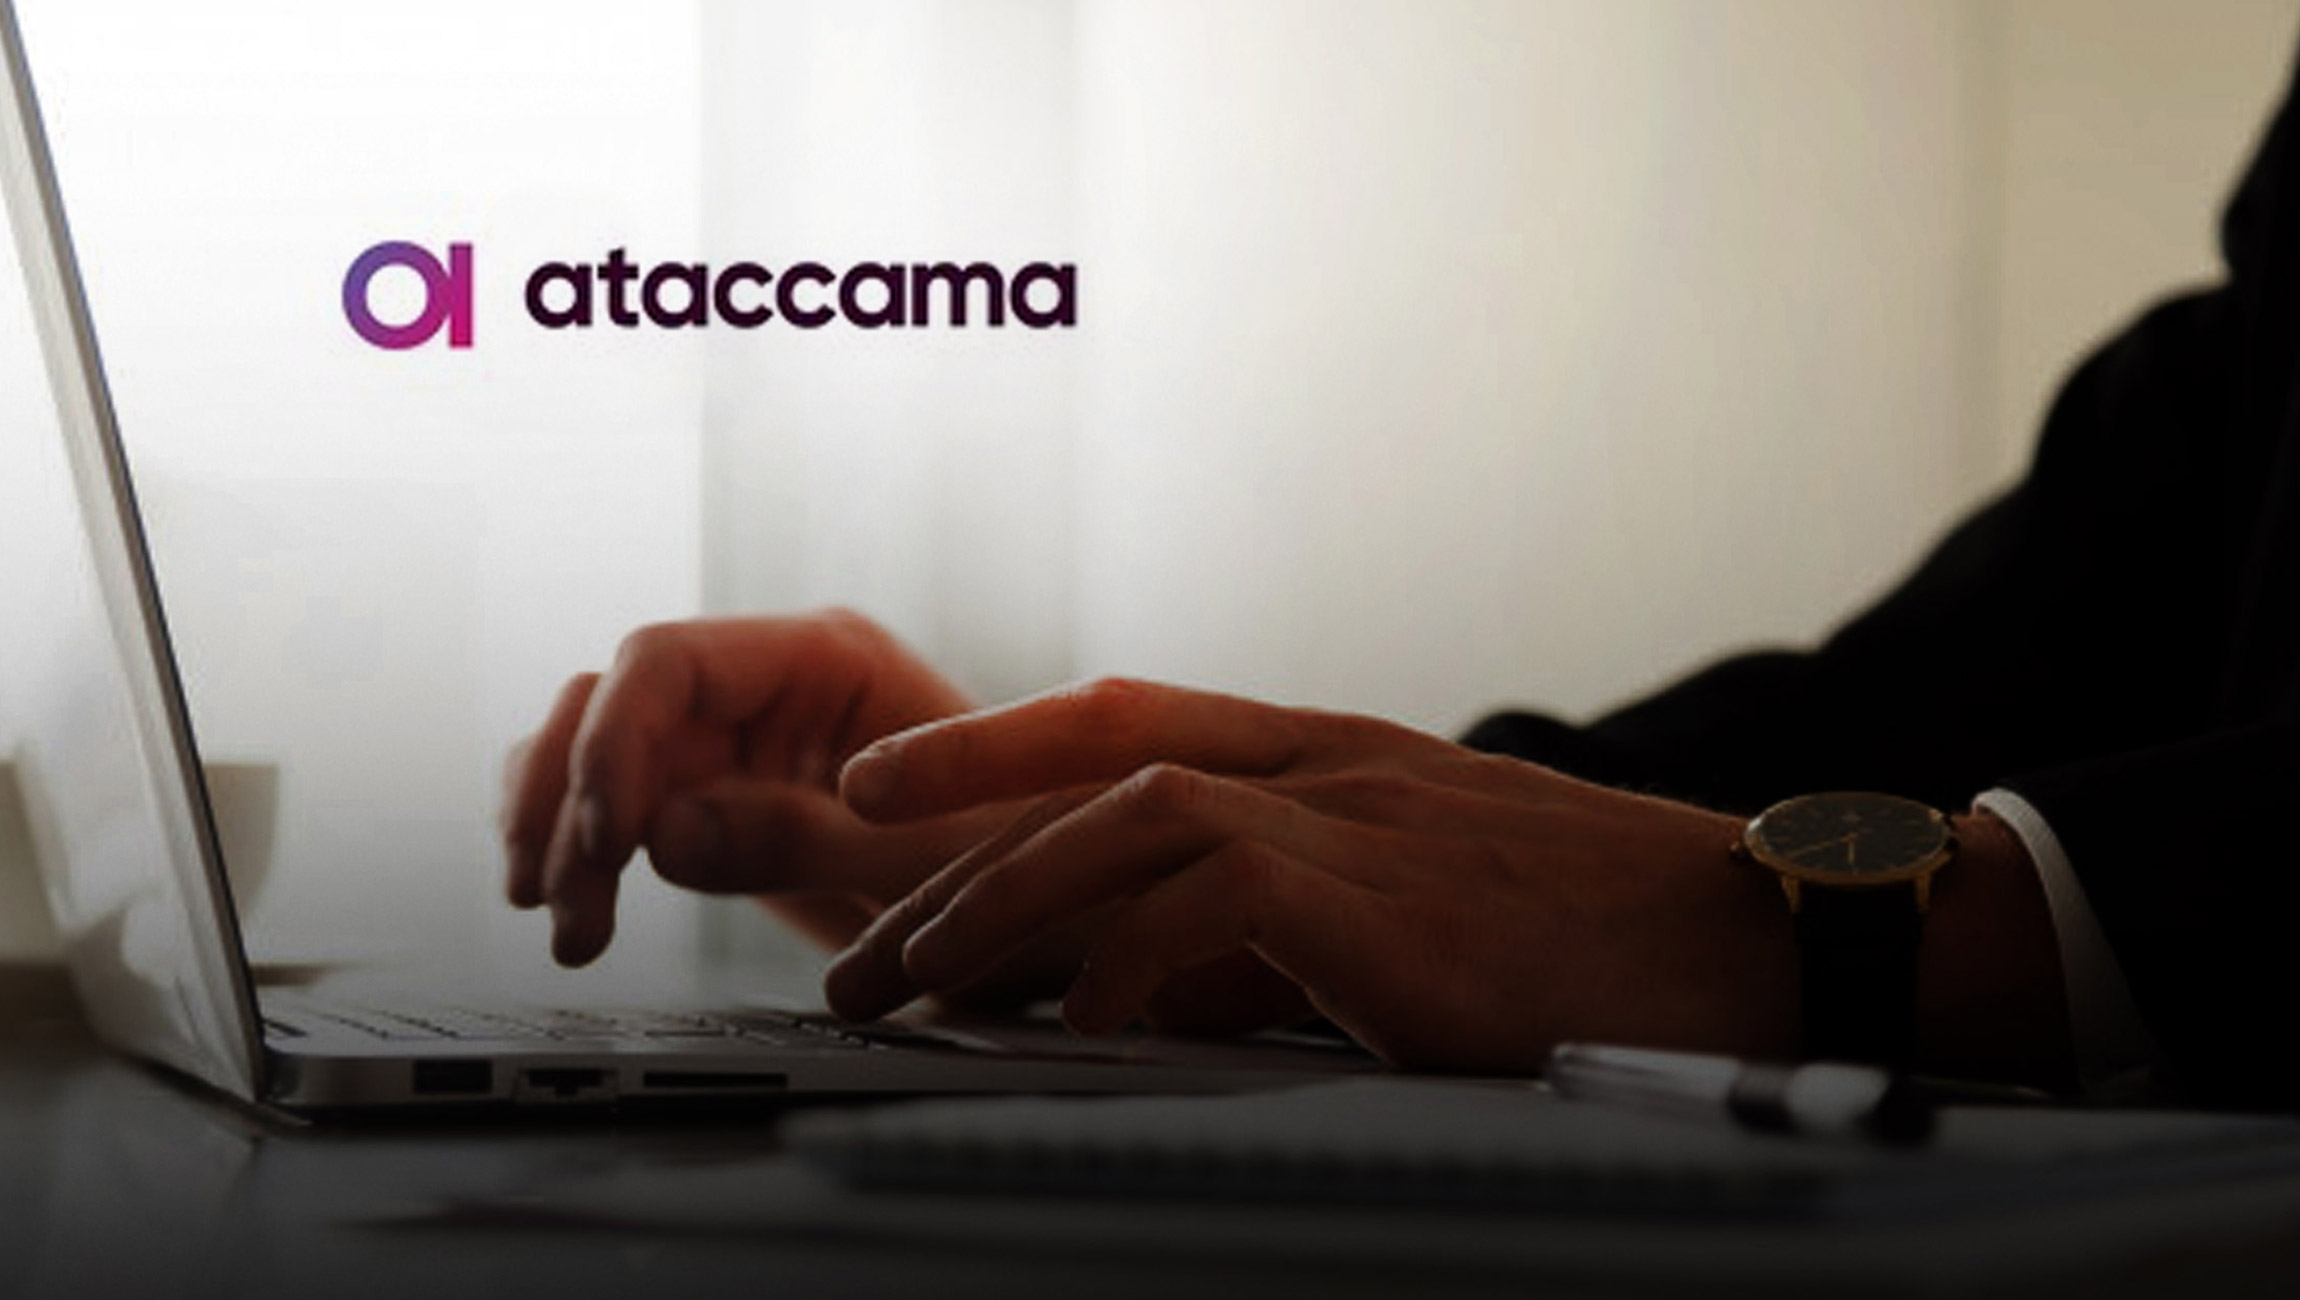 Ataccama Boasts Impressive Growth to Start 2022